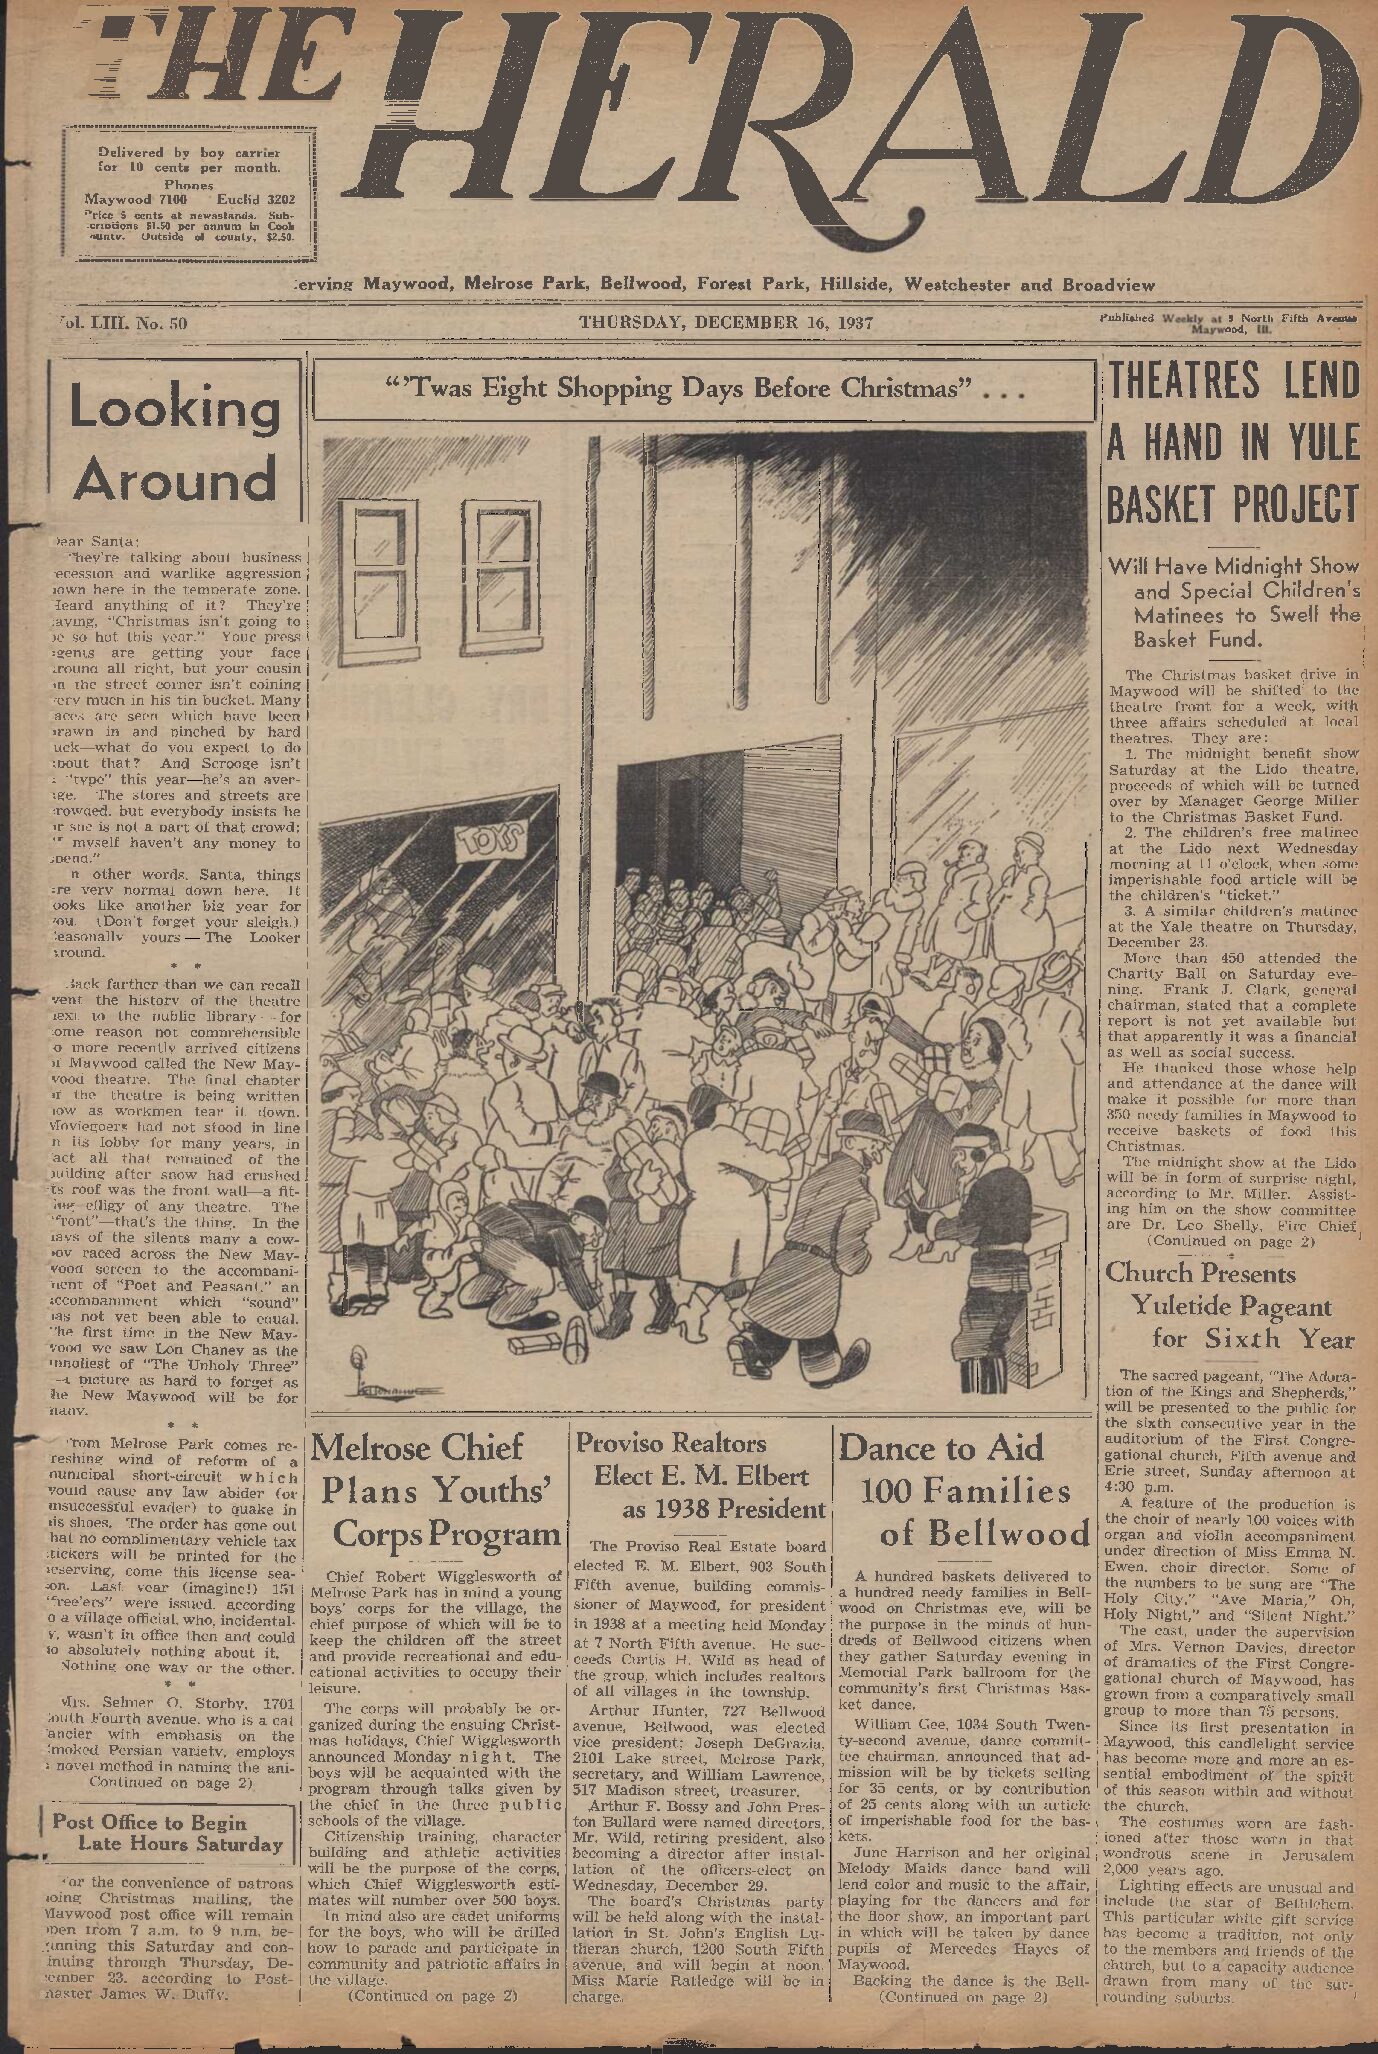 The Herald – 19371216